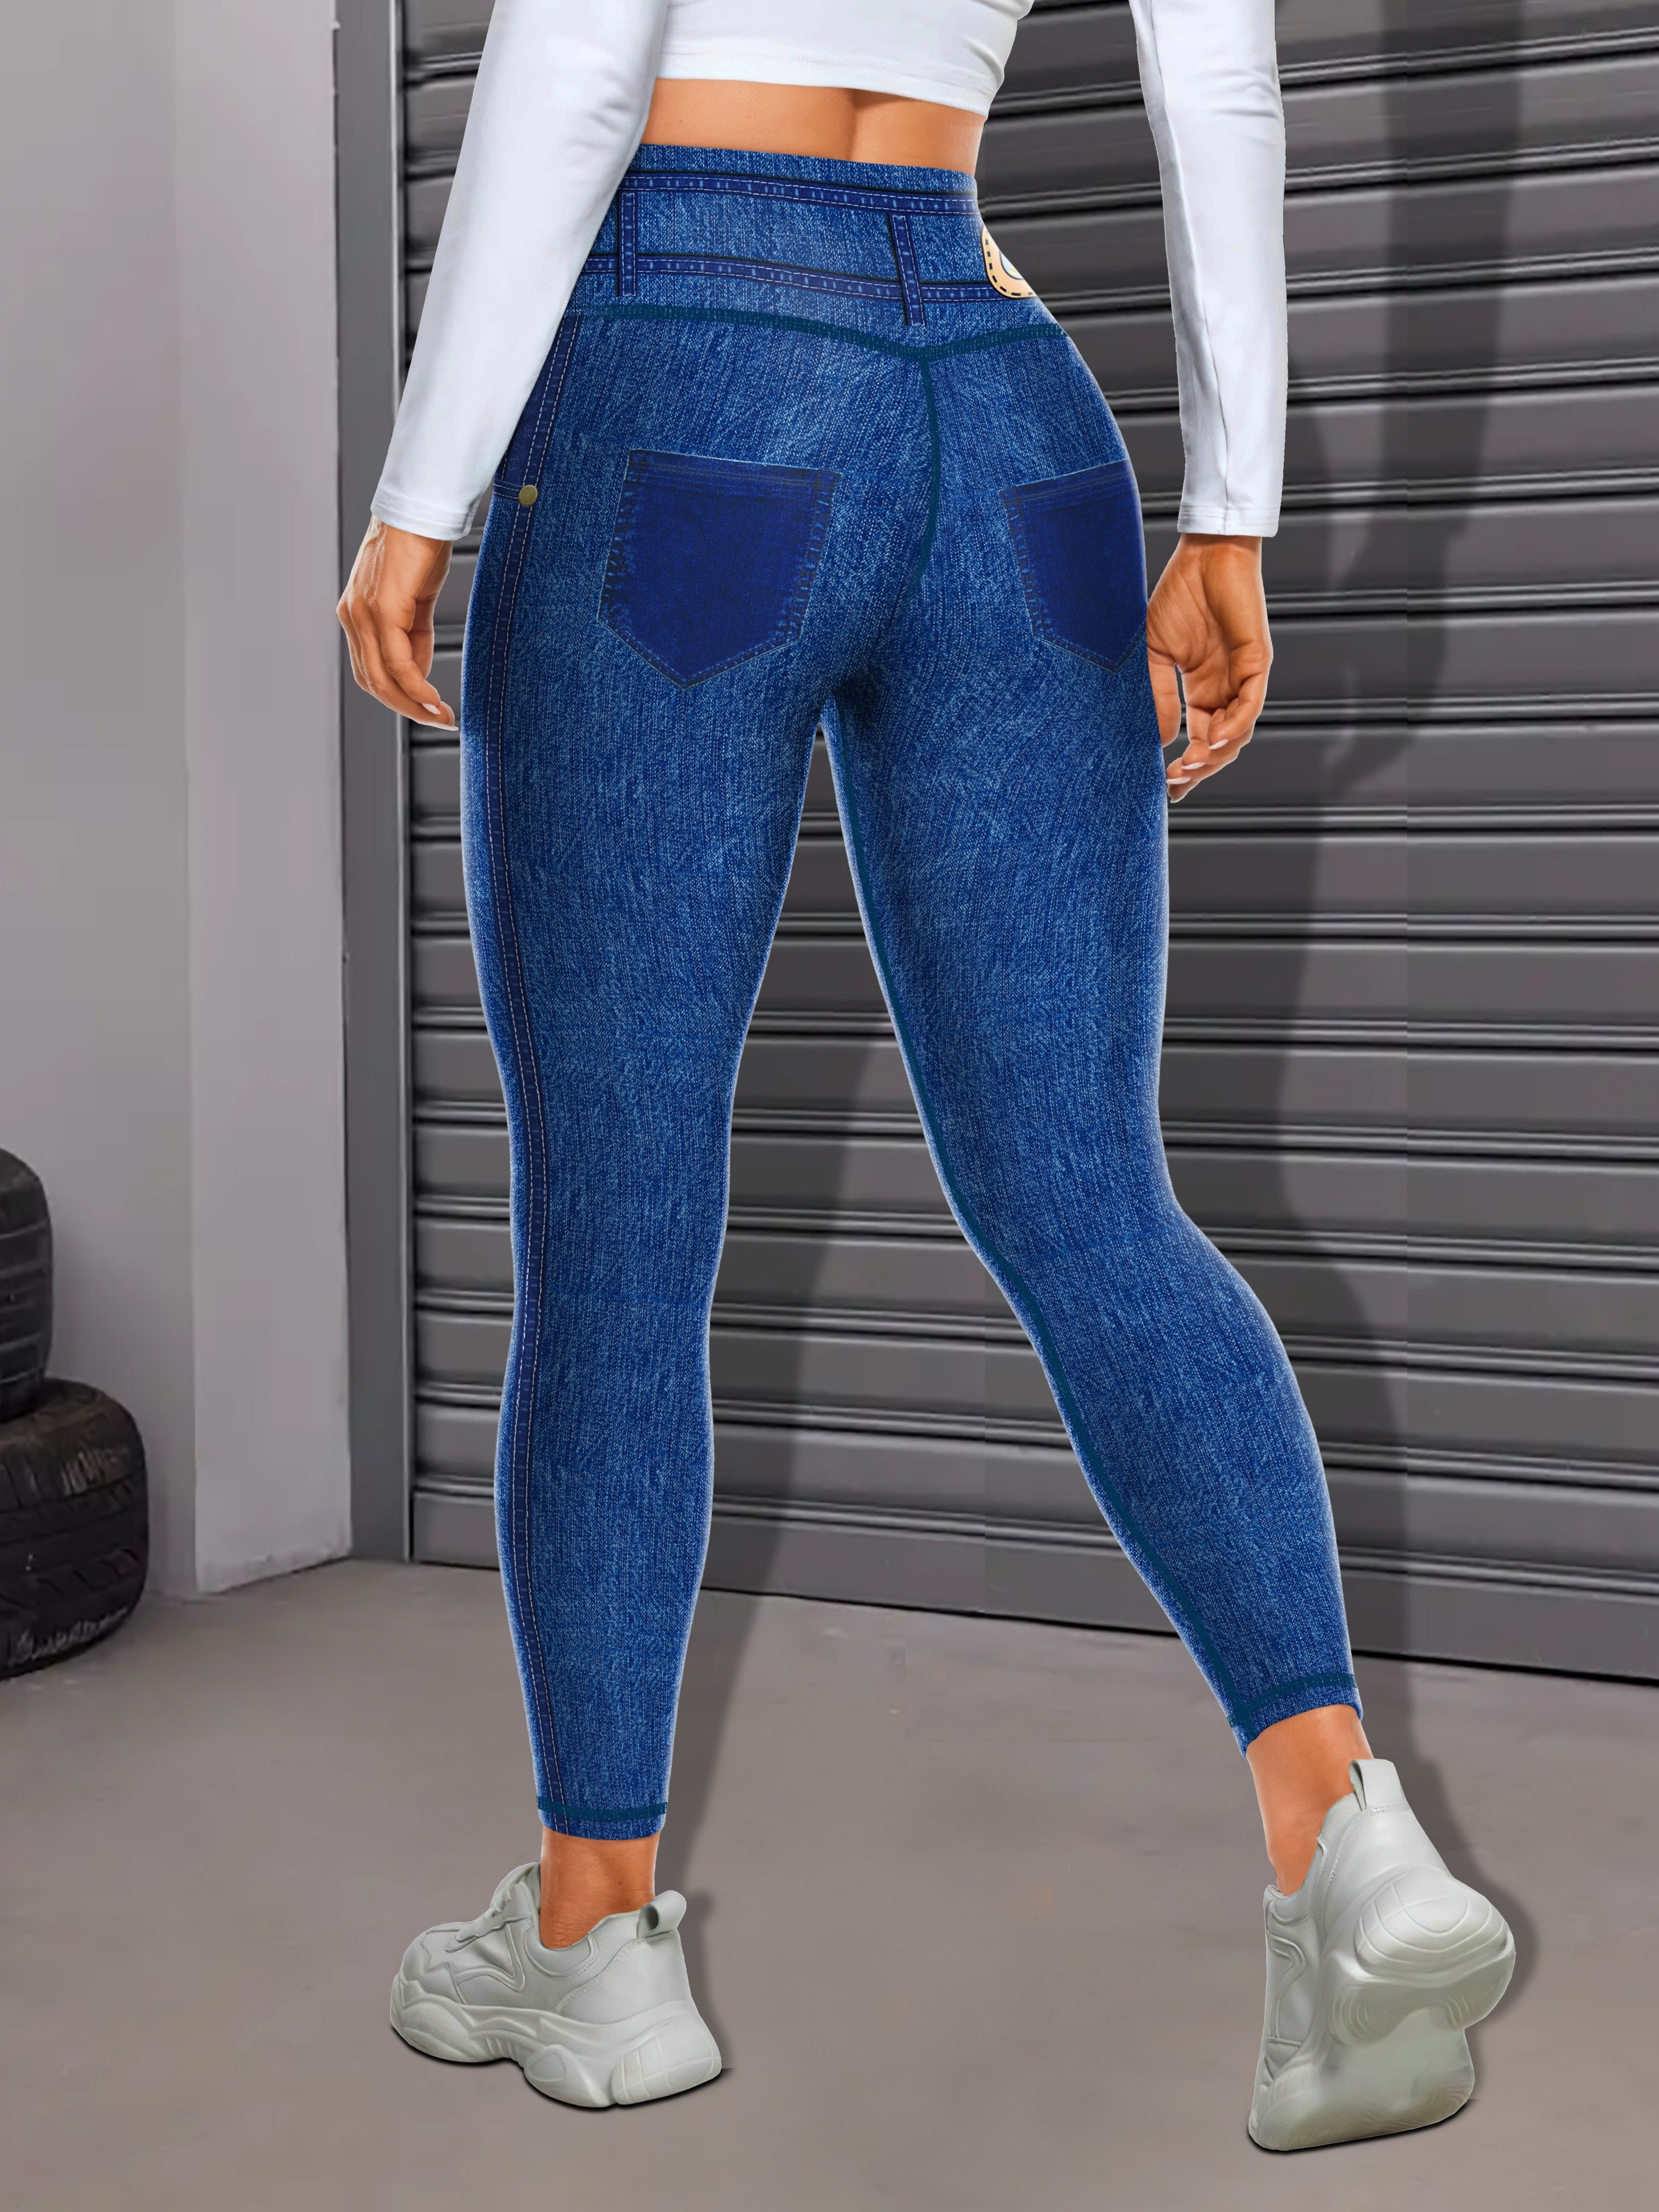 Innerwin Capri Fake Jeans Tummy Control Women Look Print Jeggings Workout  Butt Lifting Stretch Denim Printed Leggings Blue C L 